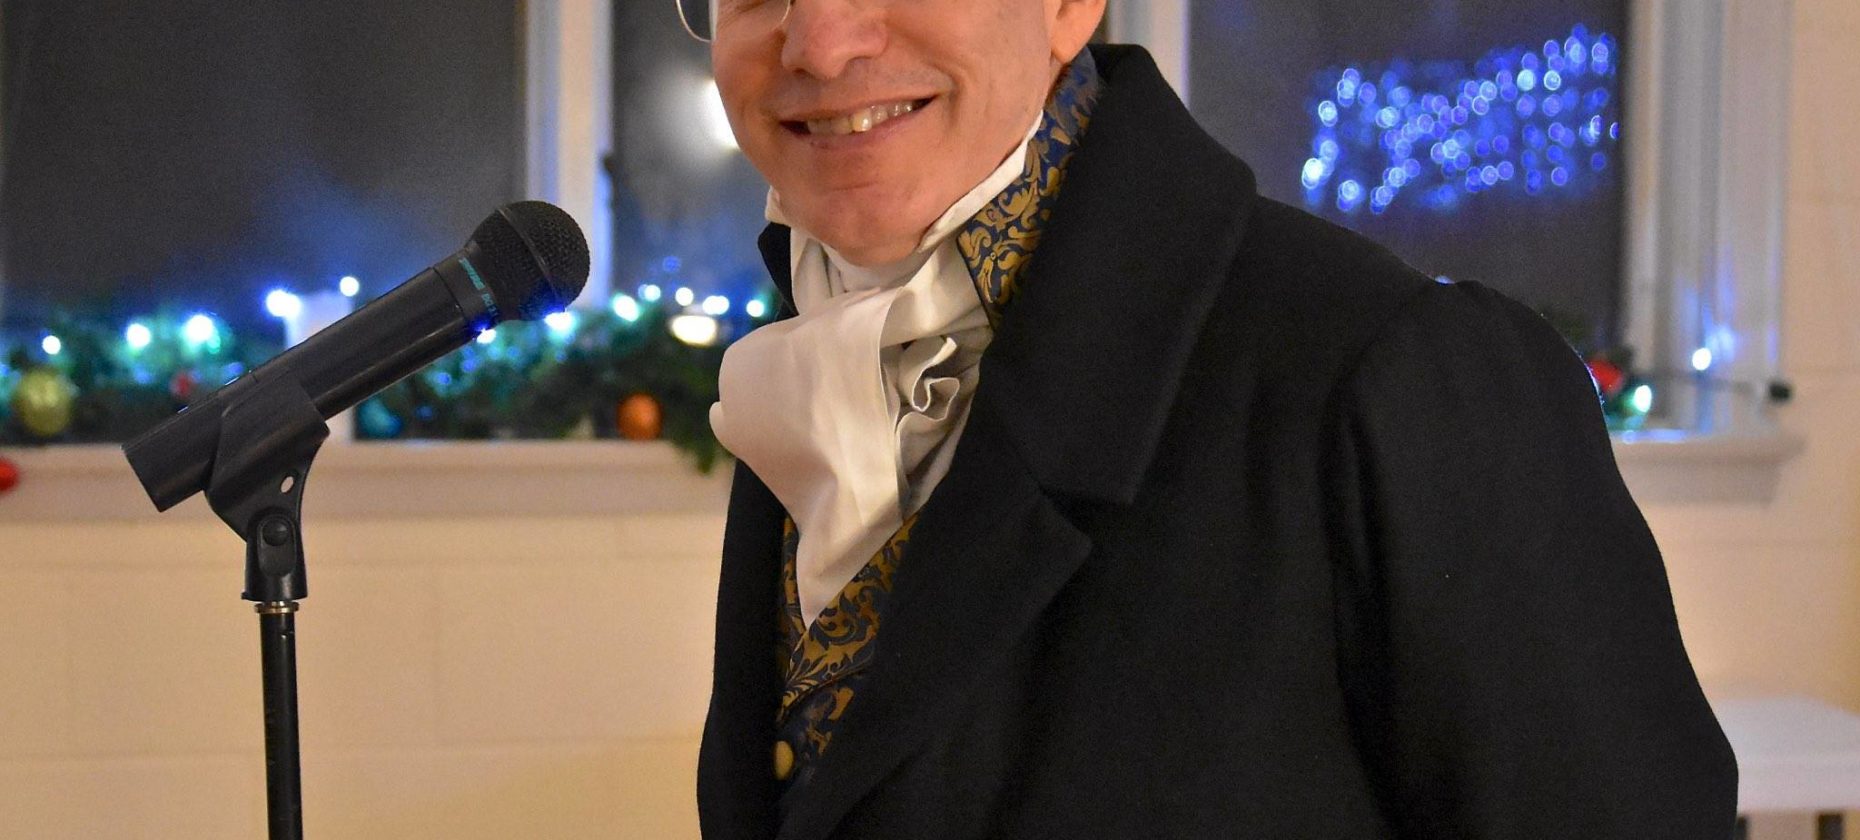 David Smukler in period costume